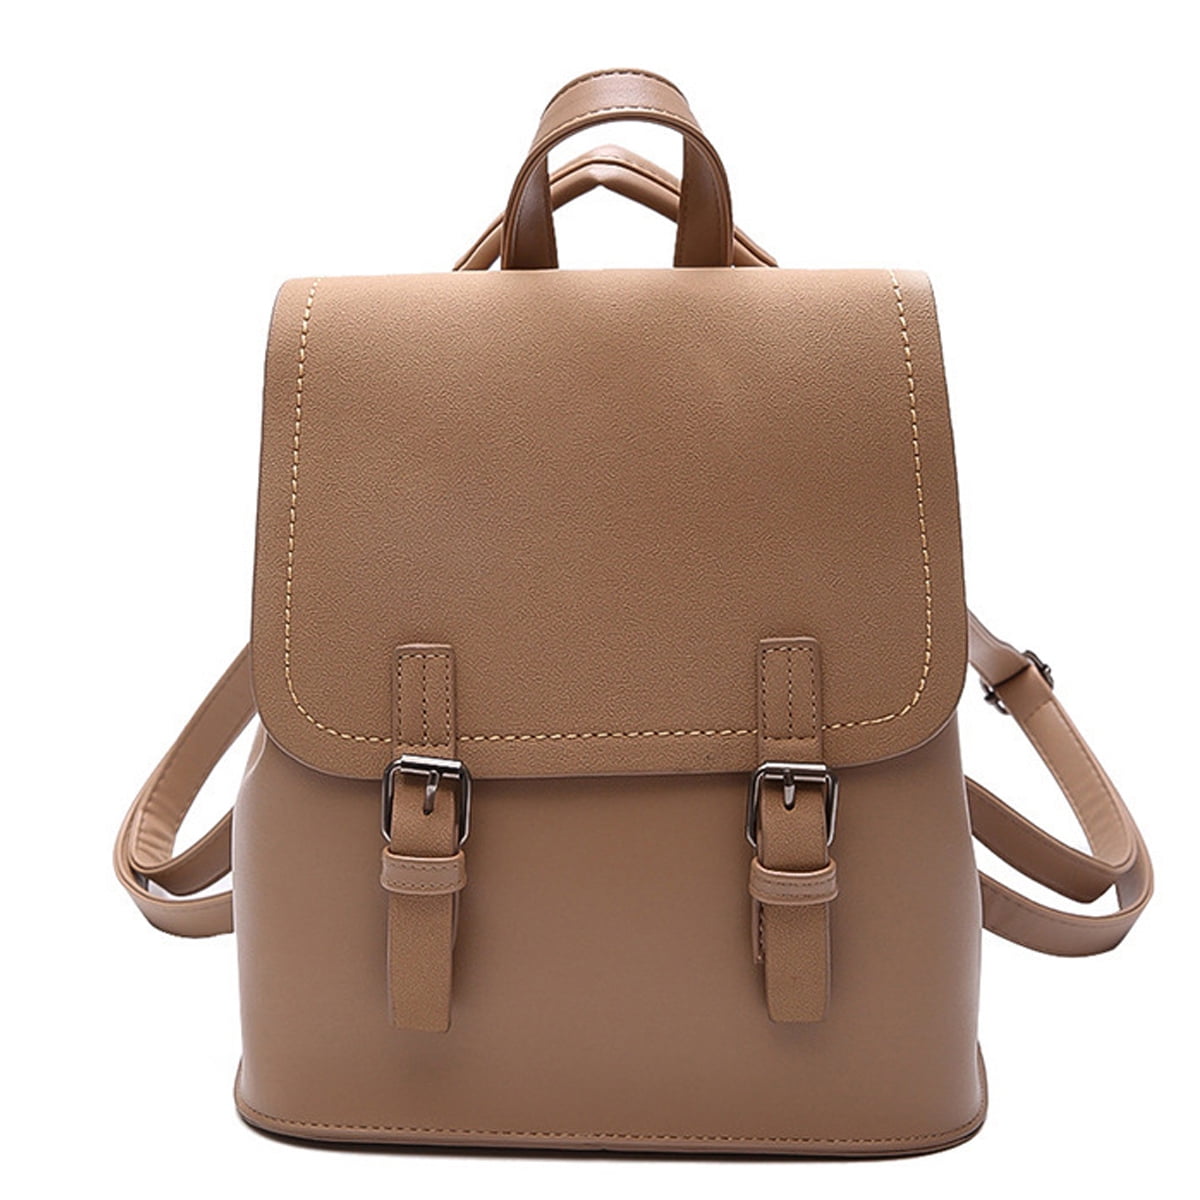 Walbest Men Causal Multifunctional Canvas Messenger Handbag Outdoor  Shoulder Sling Bag Travel Bag, Size: 9.06 x 7.87 x 3.54